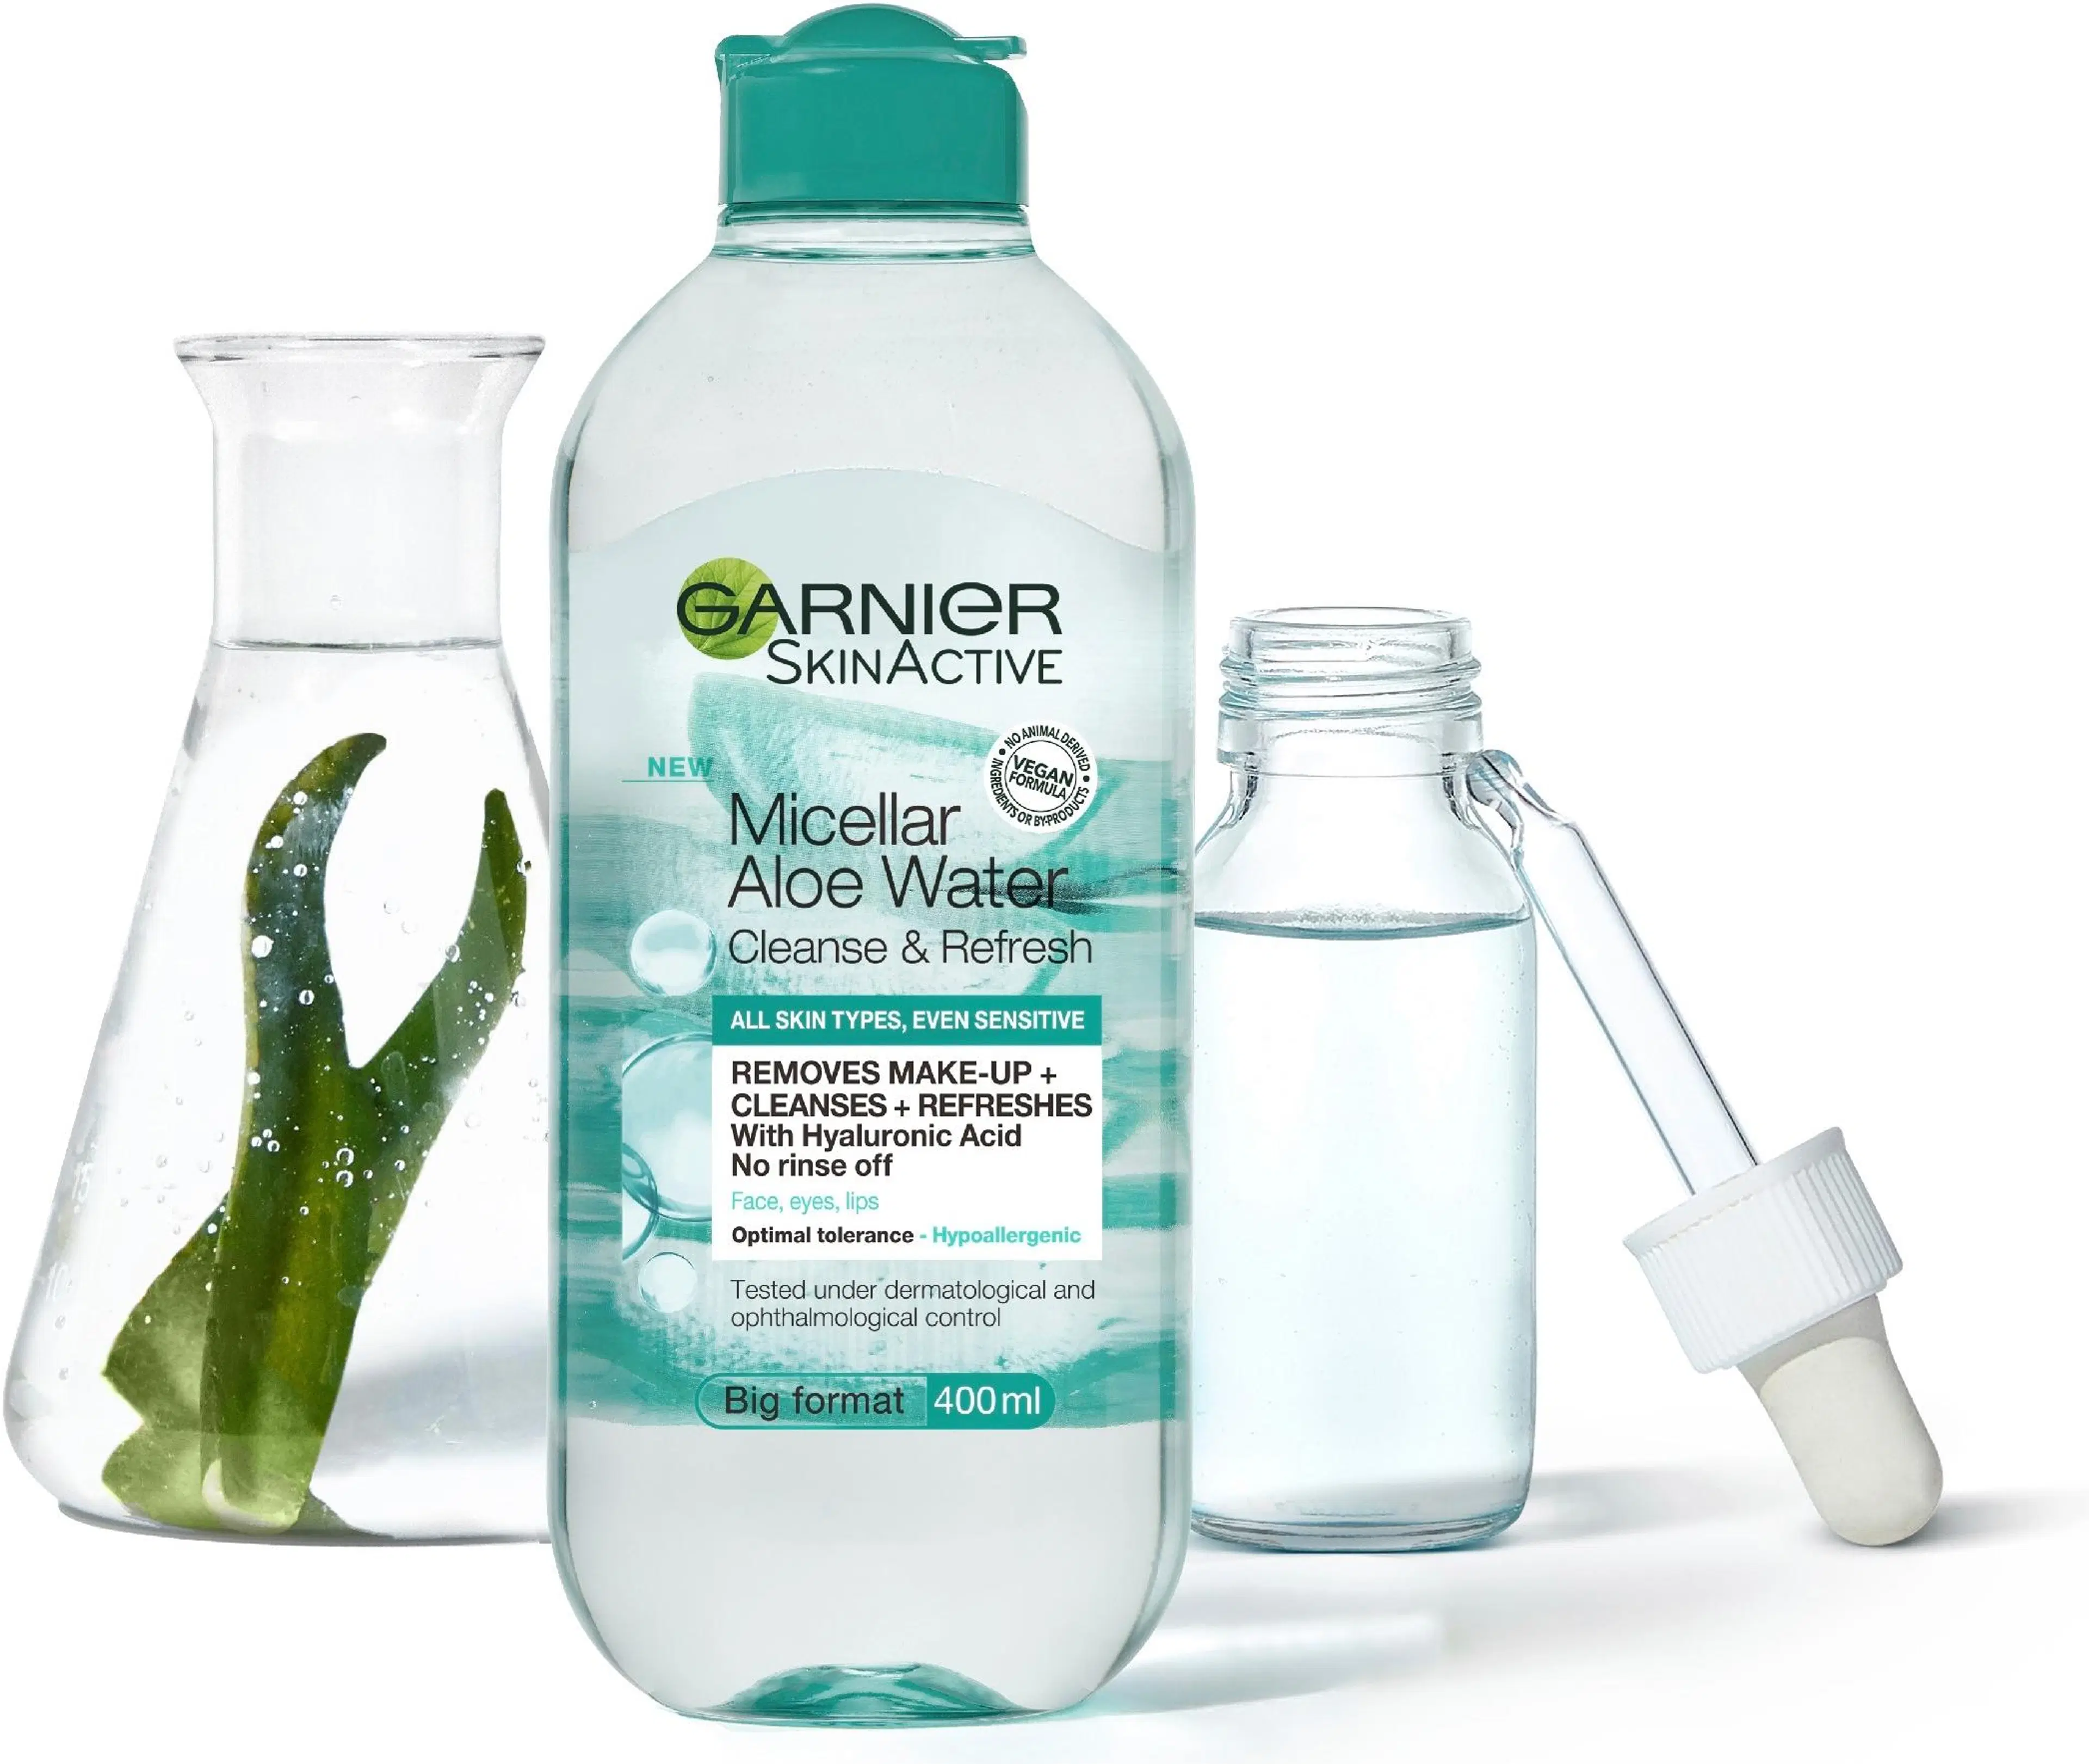 Garnier SkinActive Micellar Aloe Water Cleanse & Refresh puhdistusvesi 400ml